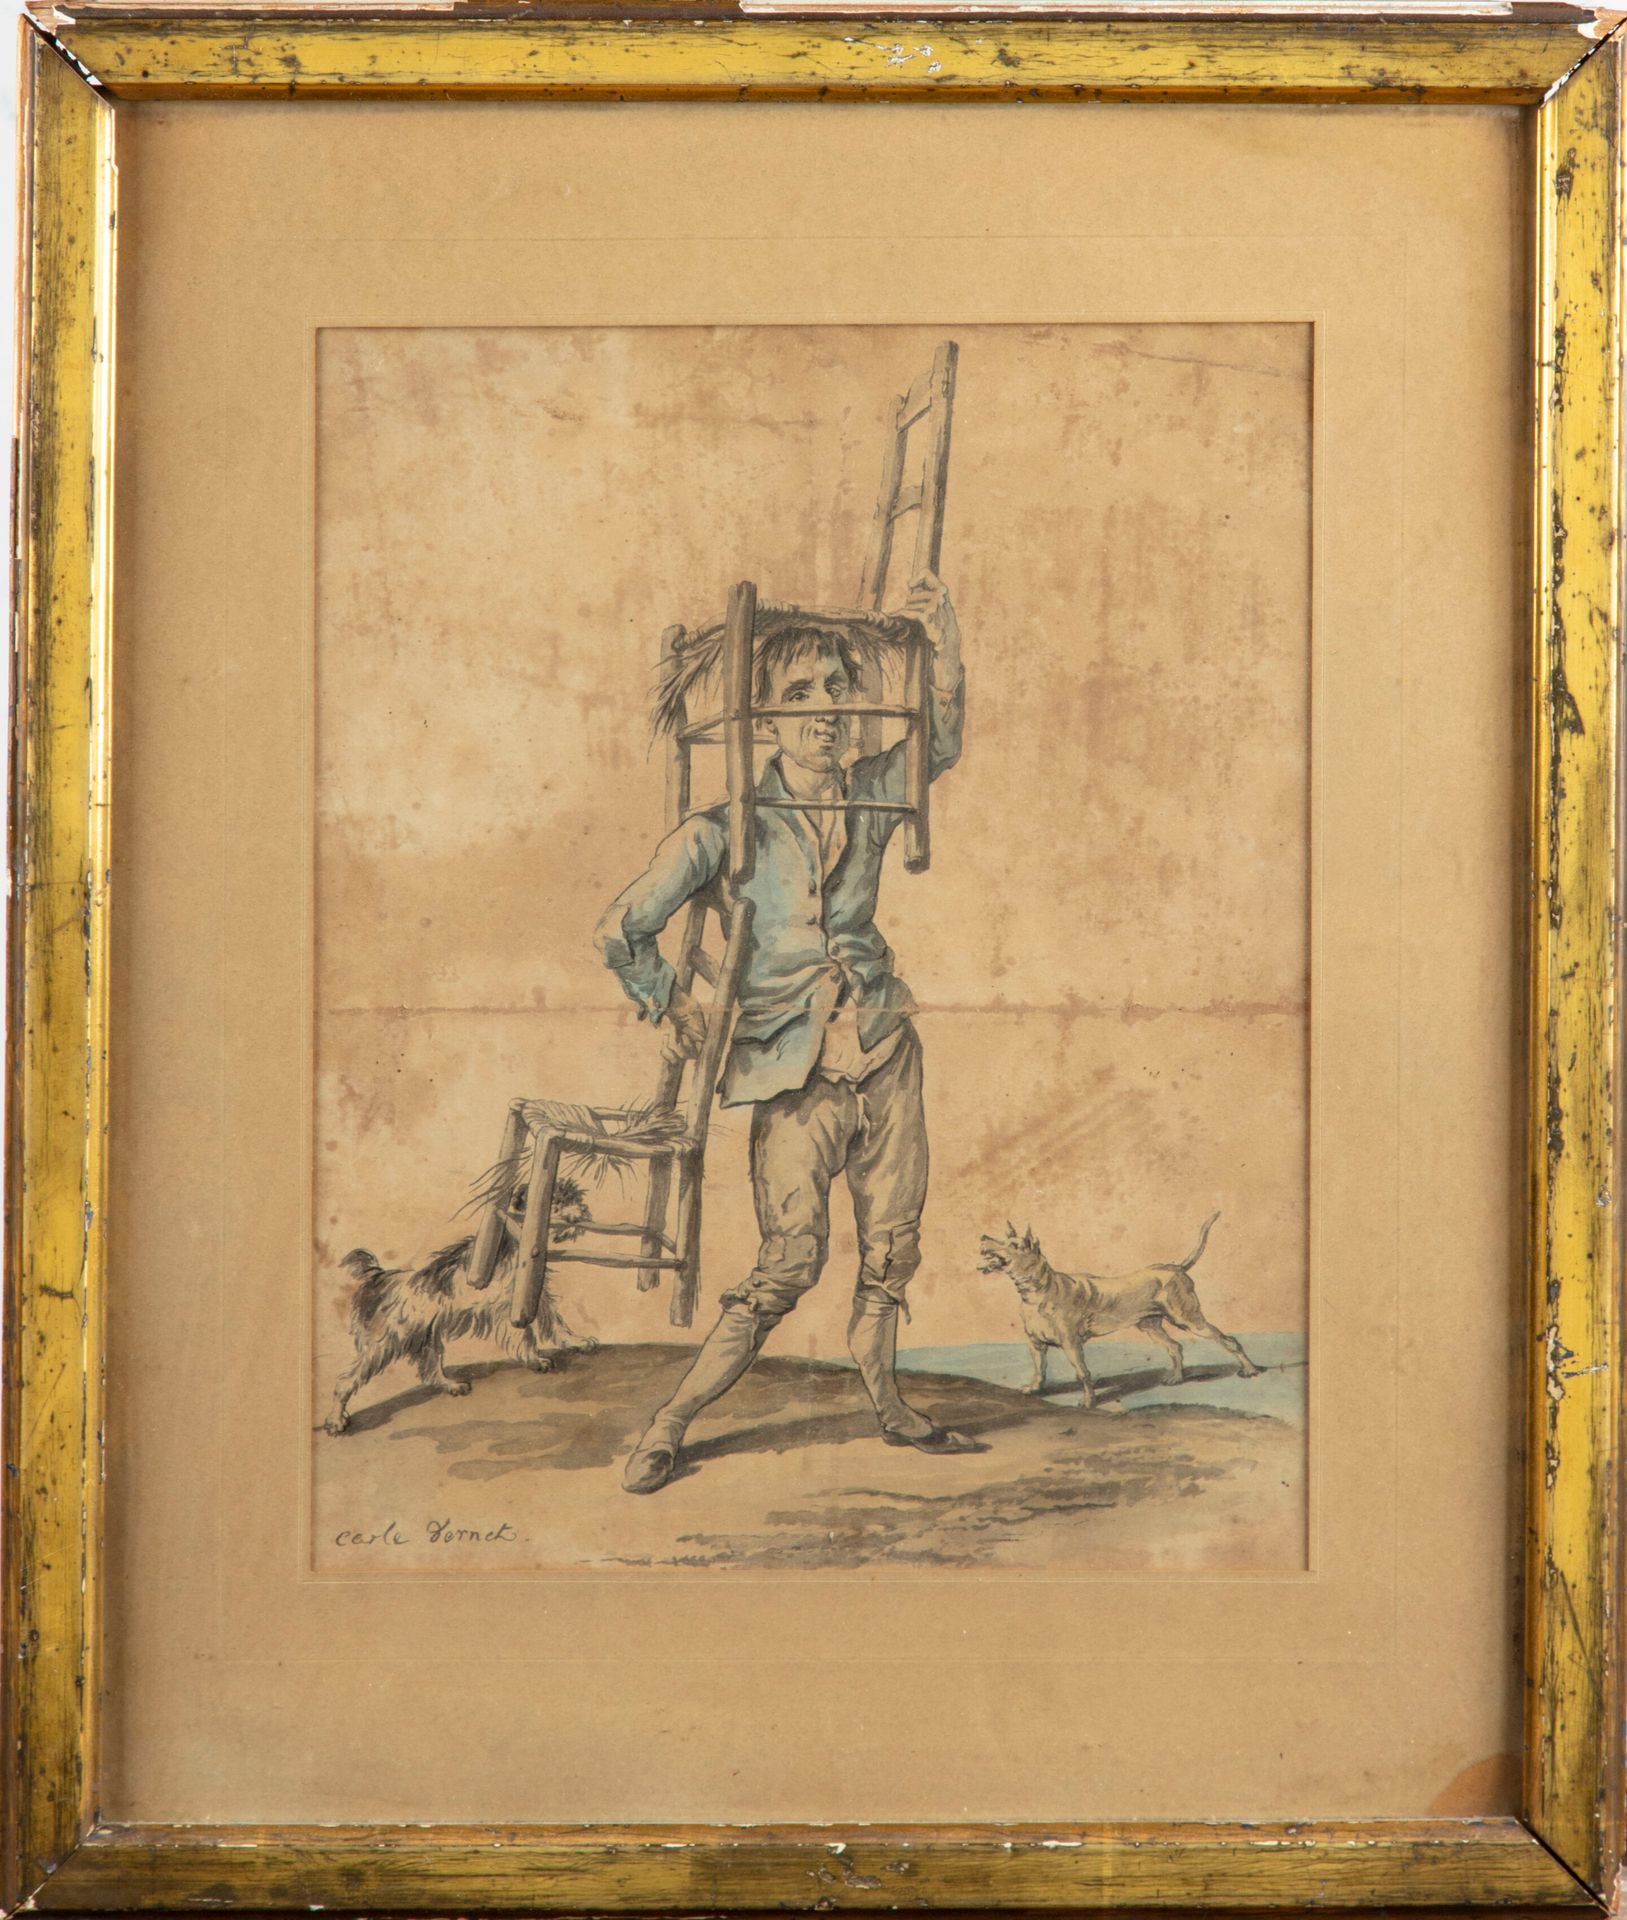 VERNET Carle VERNET (1758-1836)

被狗追赶的盗贼

左下角有签名的石版画

26,5 x 21,5 正在观看

褶皱和潮湿的污渍